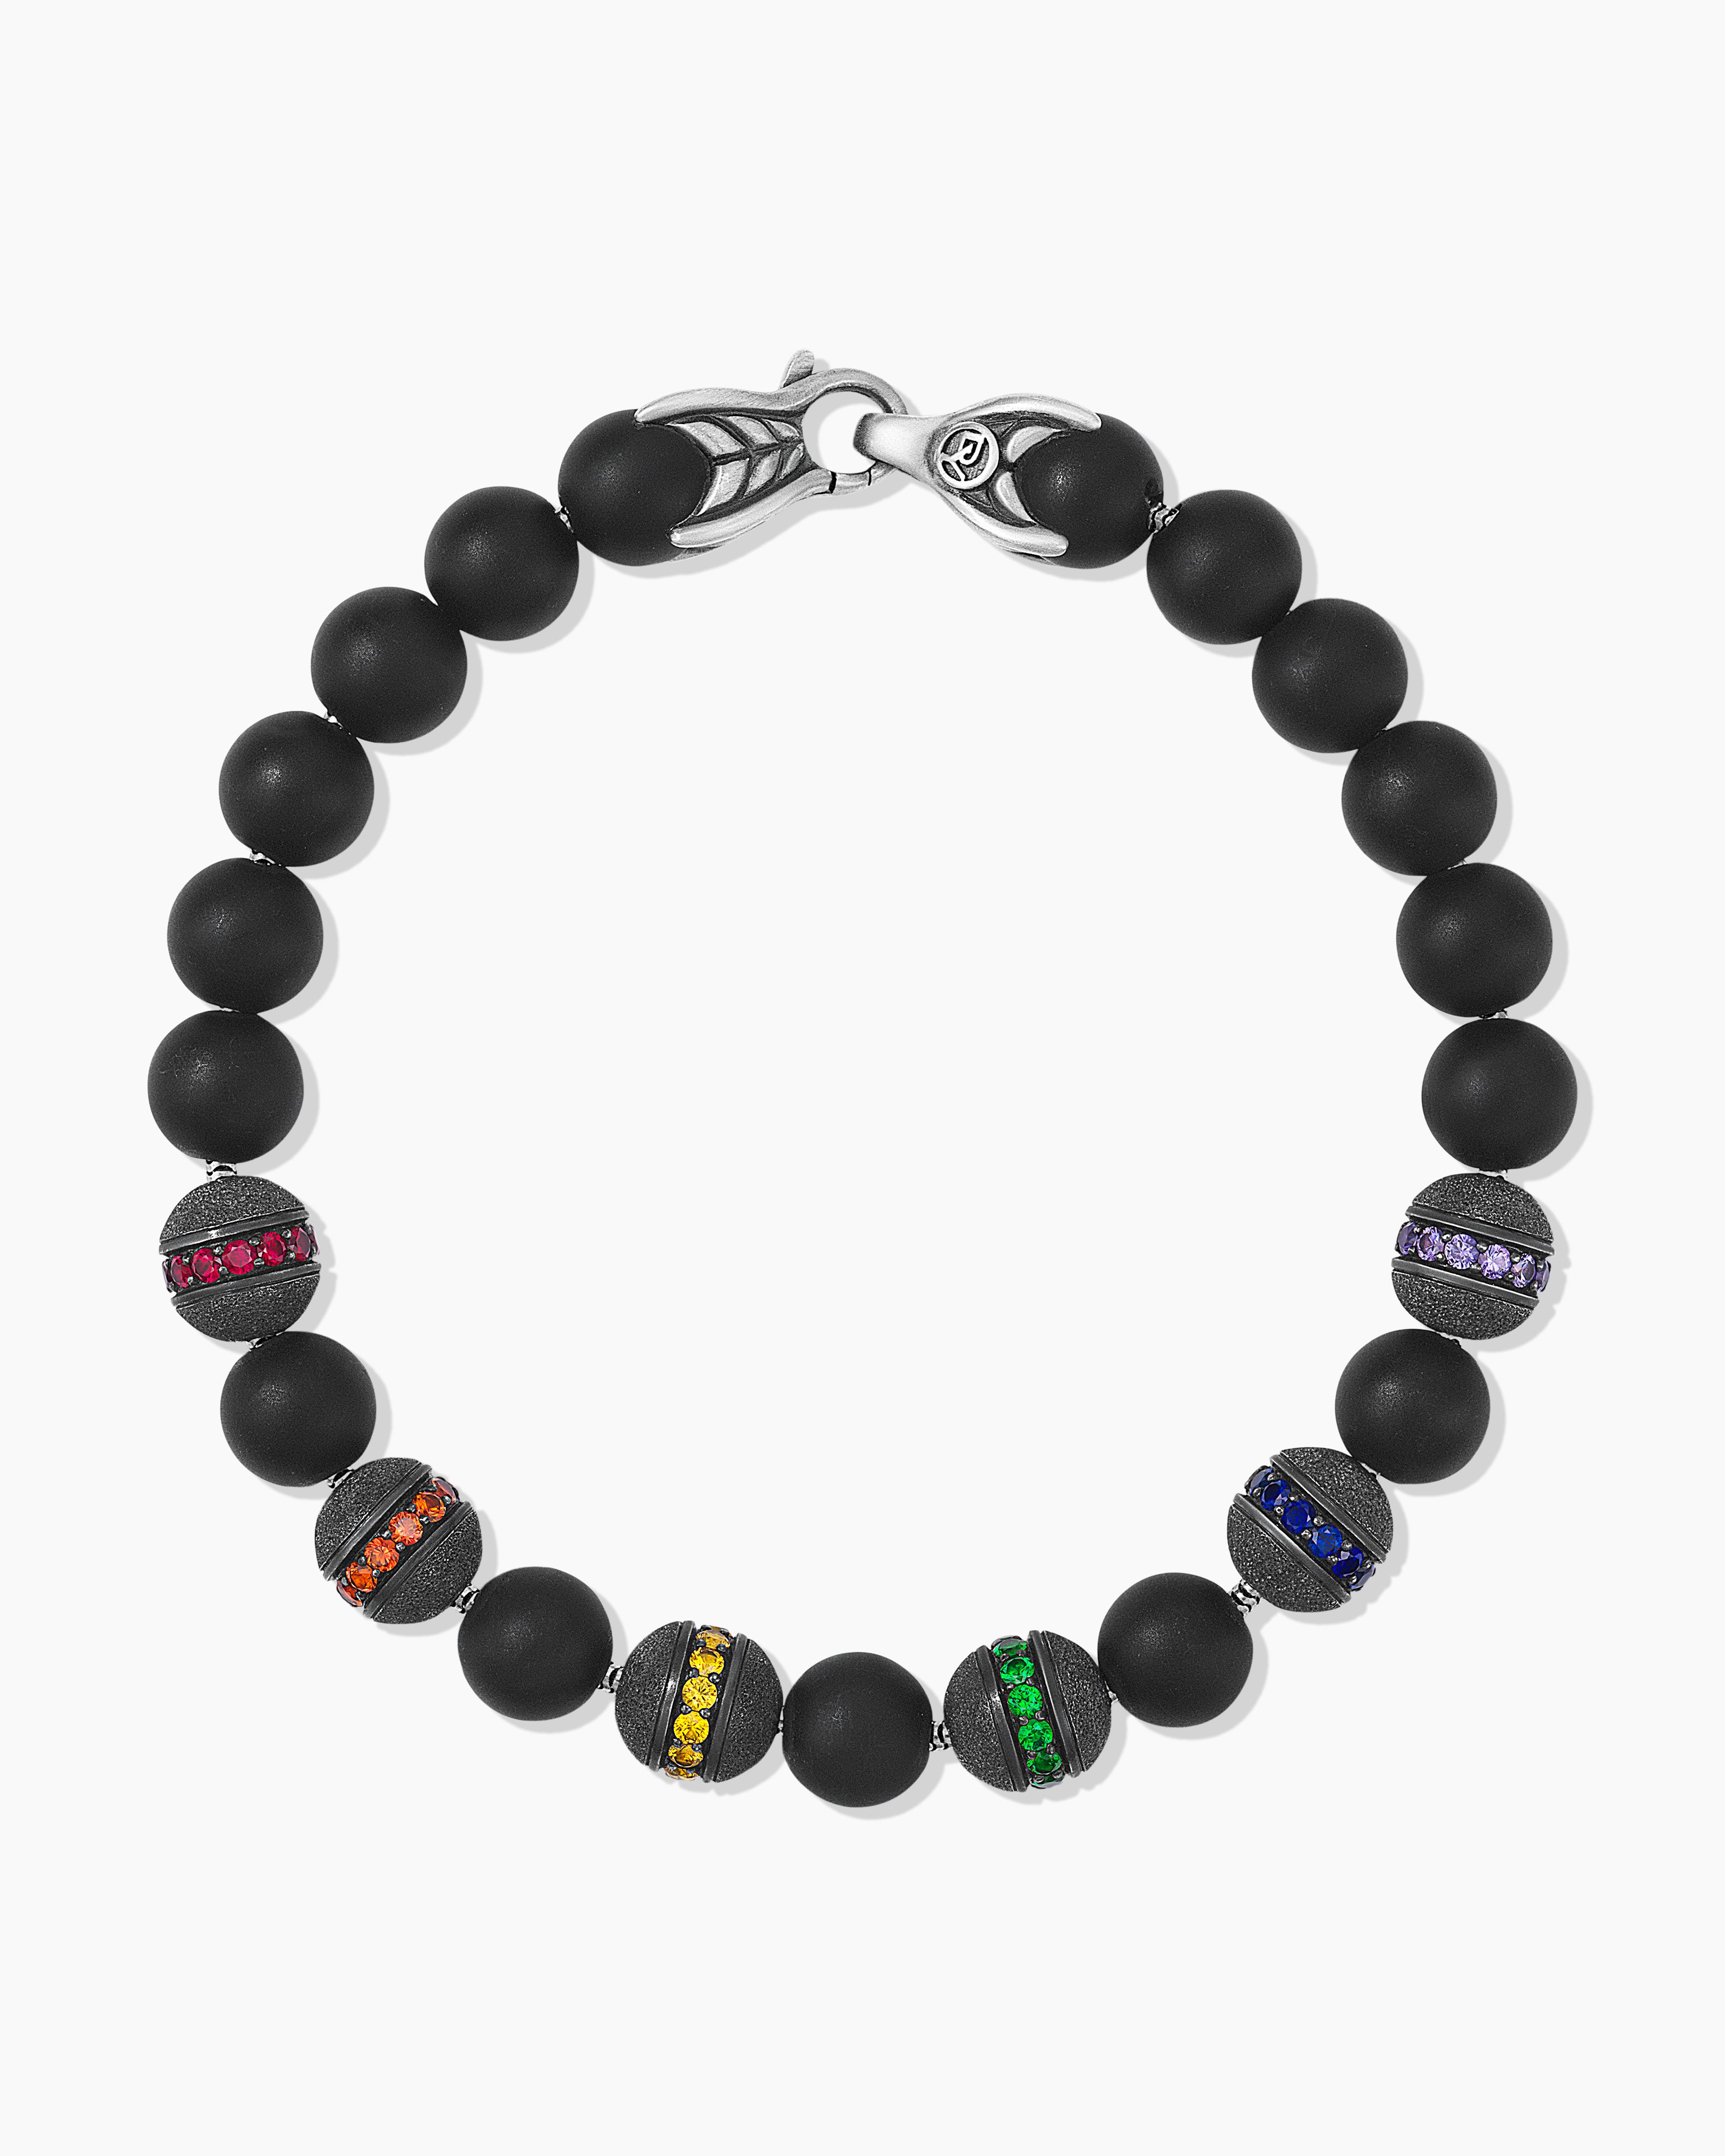 Spiritual Beads Rainbow Bracelet in Sterling Silver, 8mm